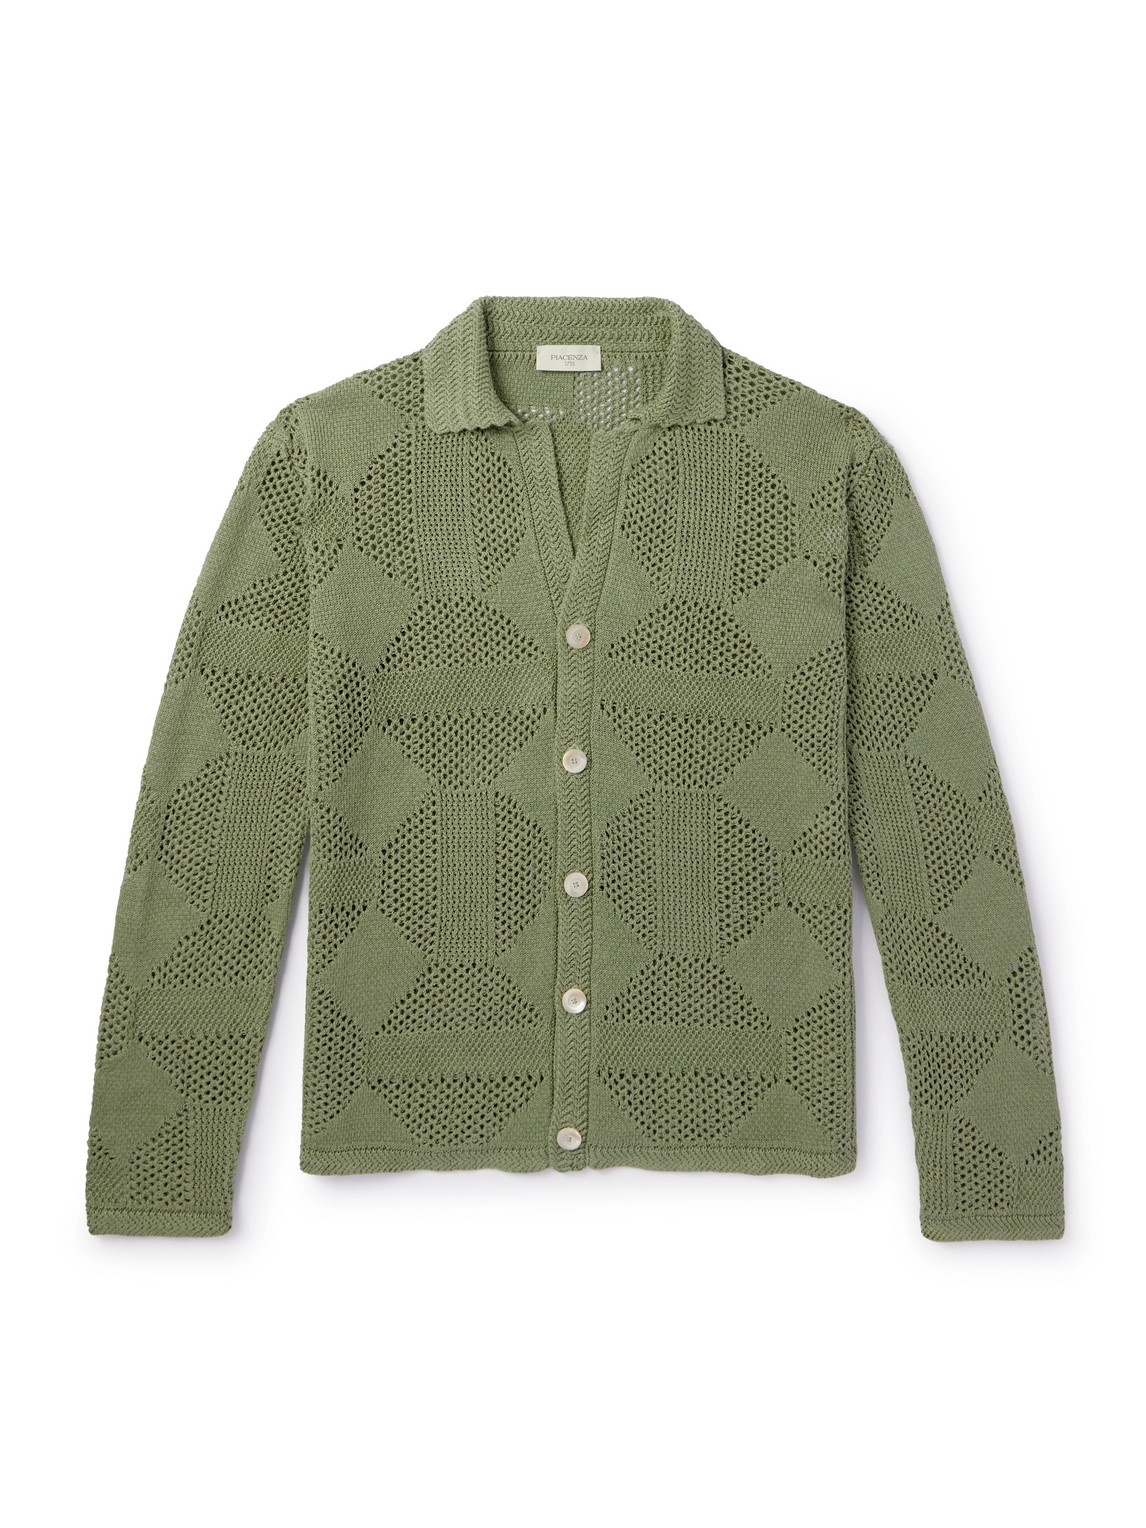 PIACENZA 1733 - Crocheted Linen and Cotton-Blend Shirt - Men - Green - IT 54 von PIACENZA 1733